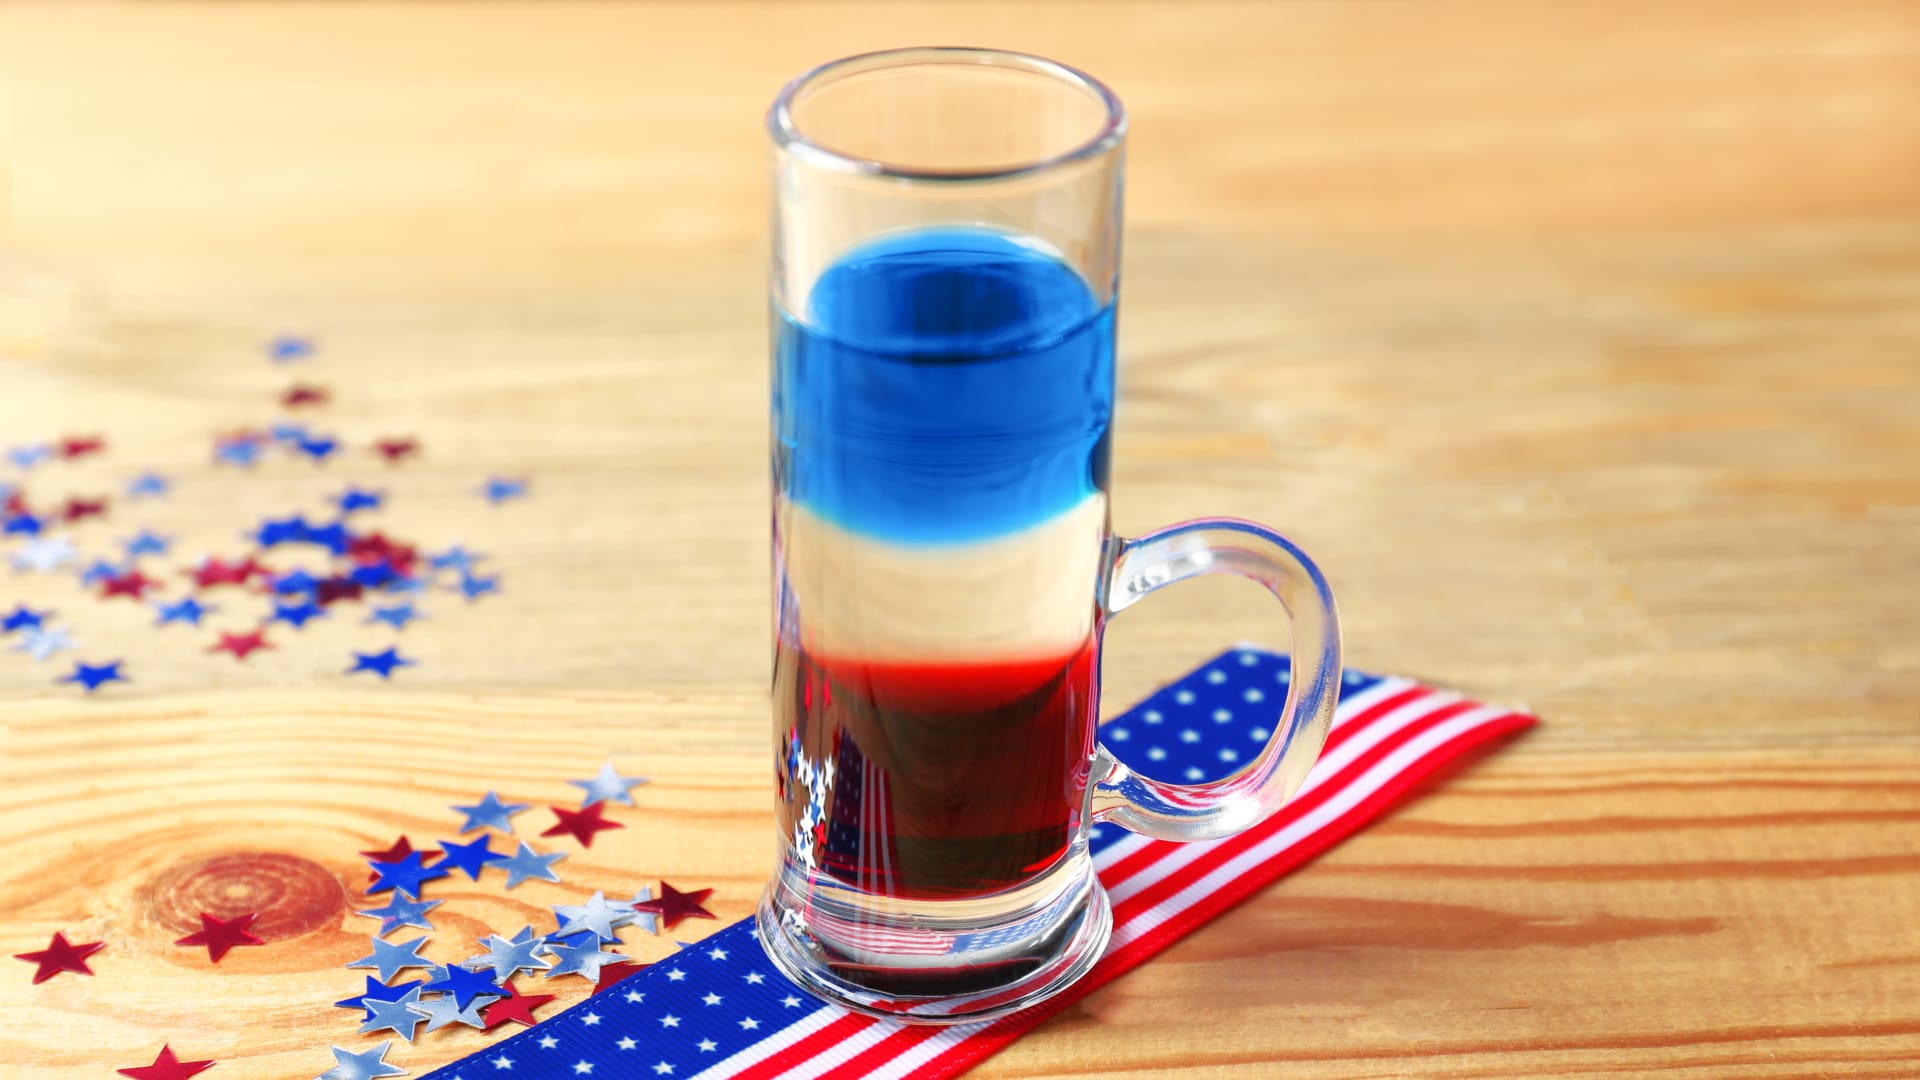 American Flag drink recipe